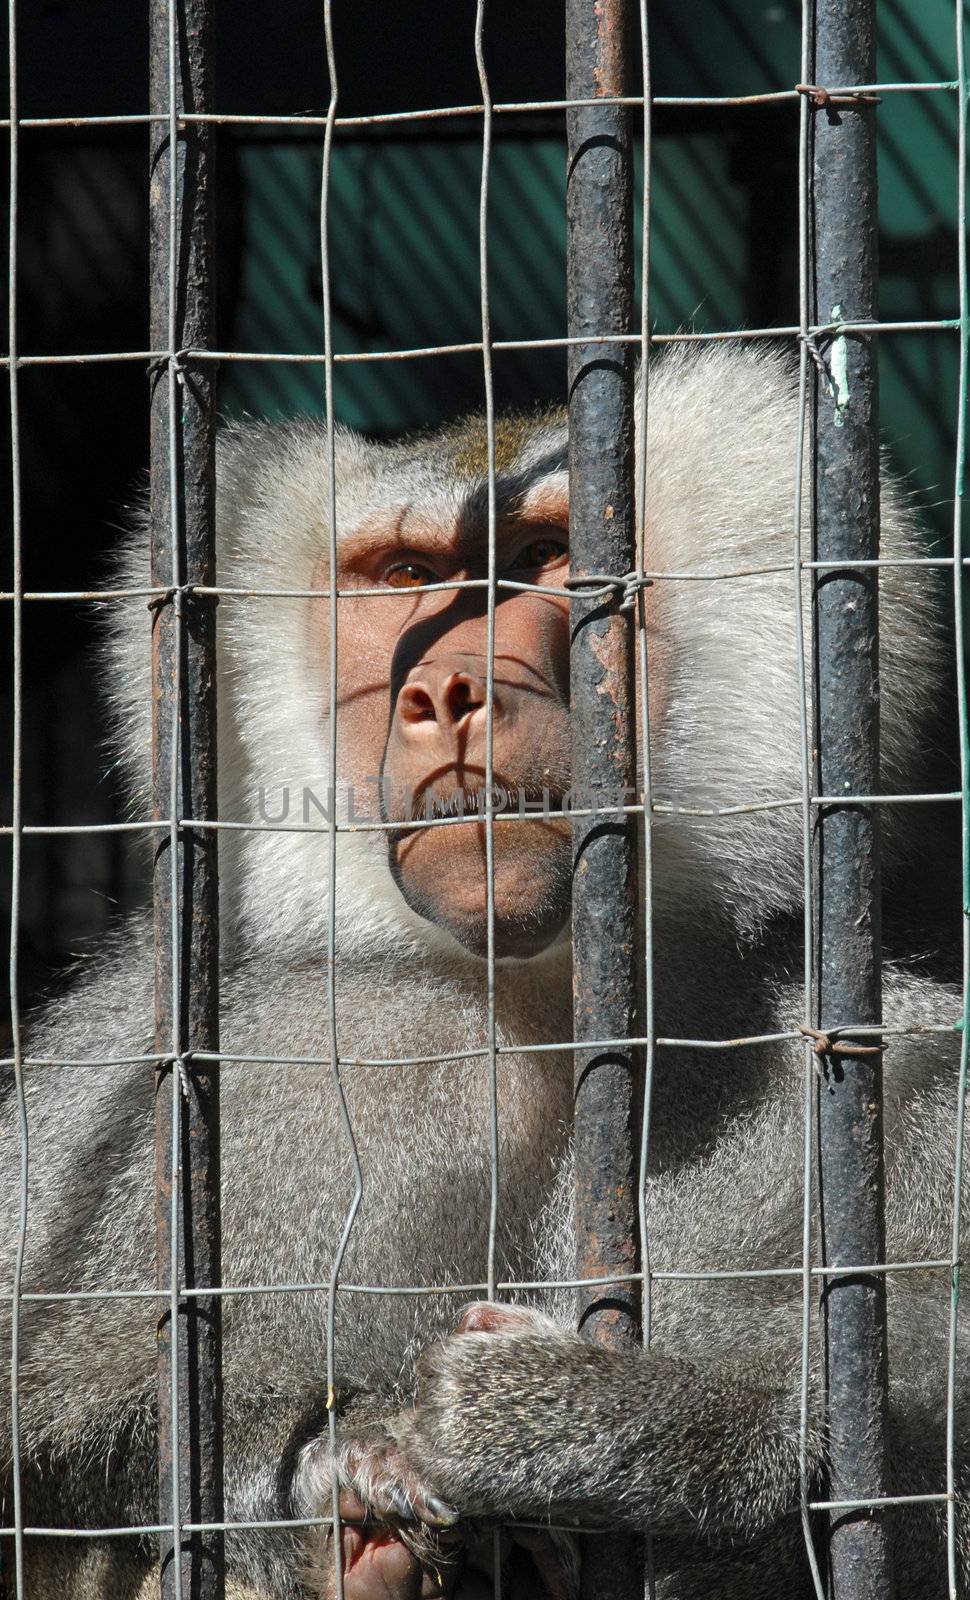 Mandrill monkey behind bars by cienpies